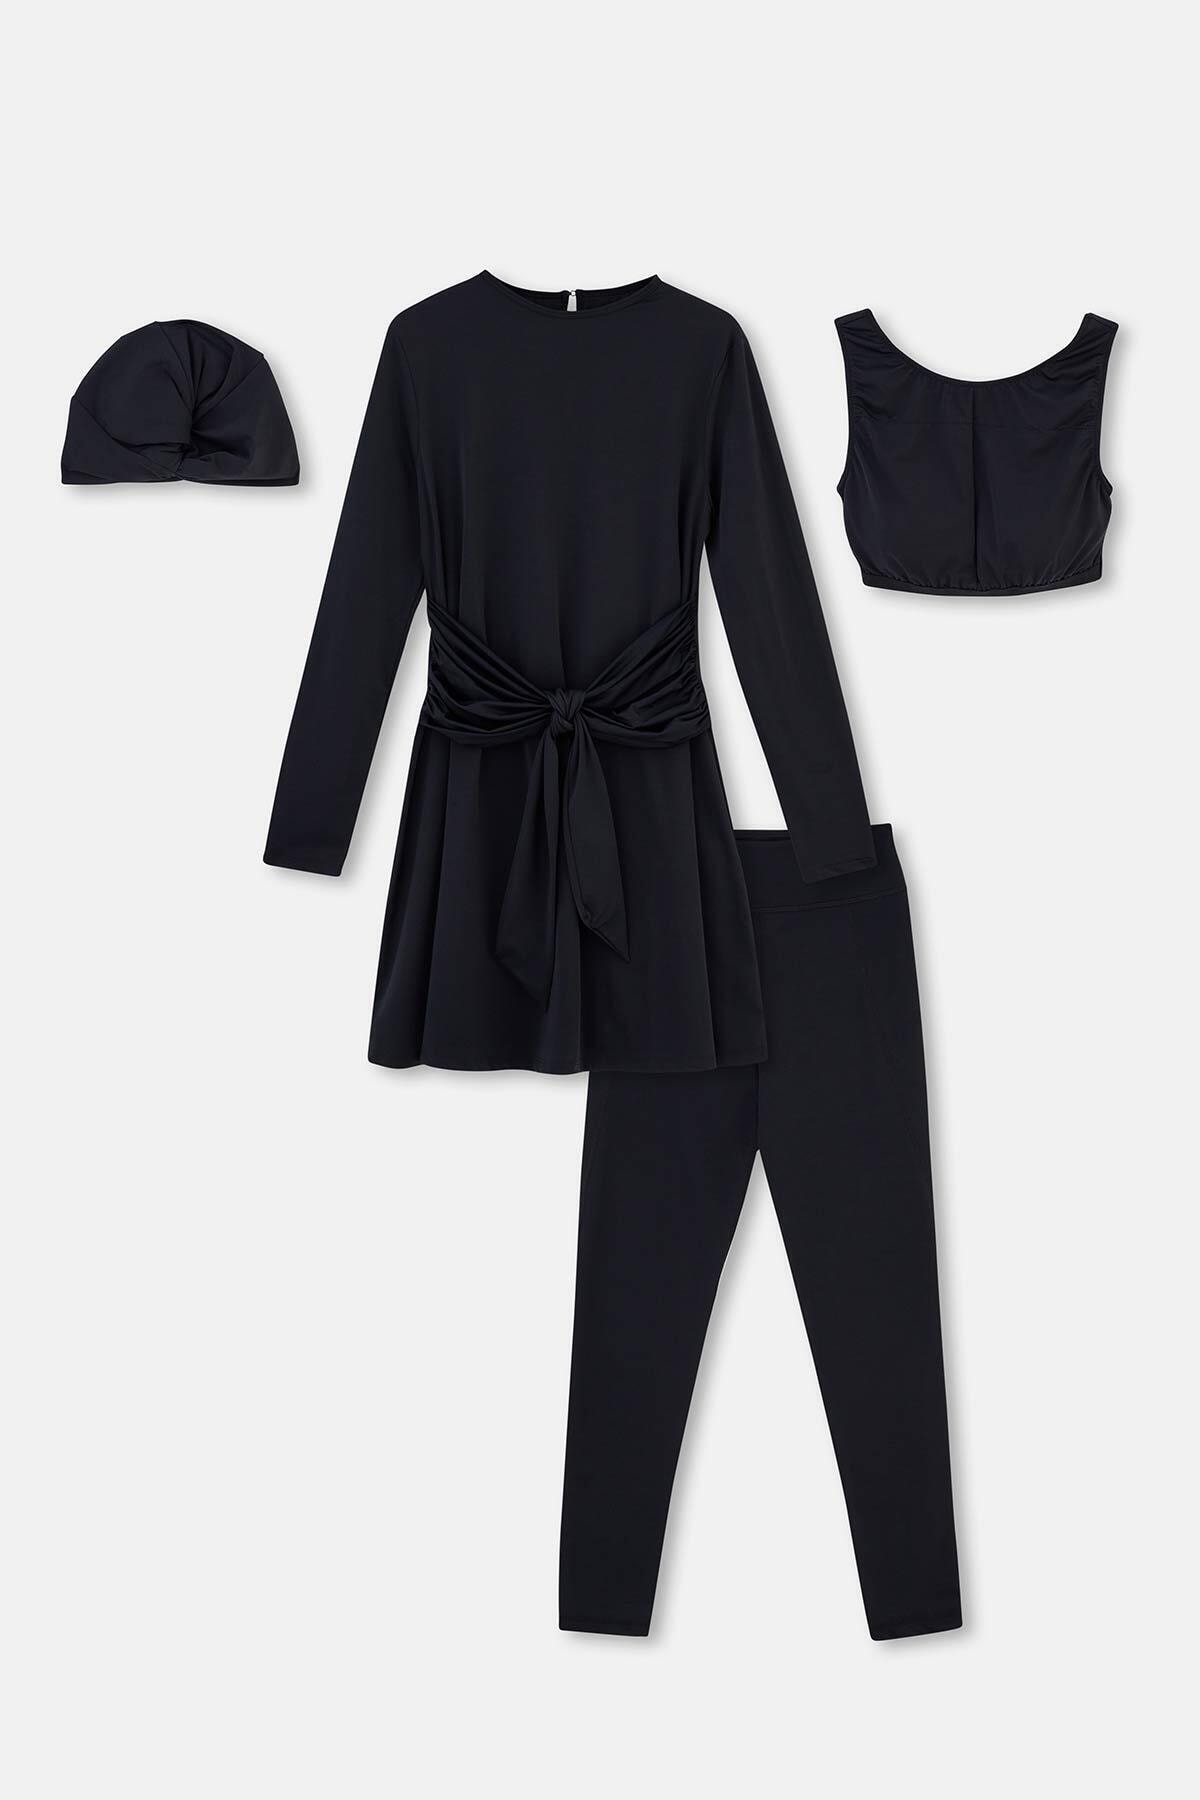 Dagi Black Long Sleeve 4-Piece Swimsuit Set